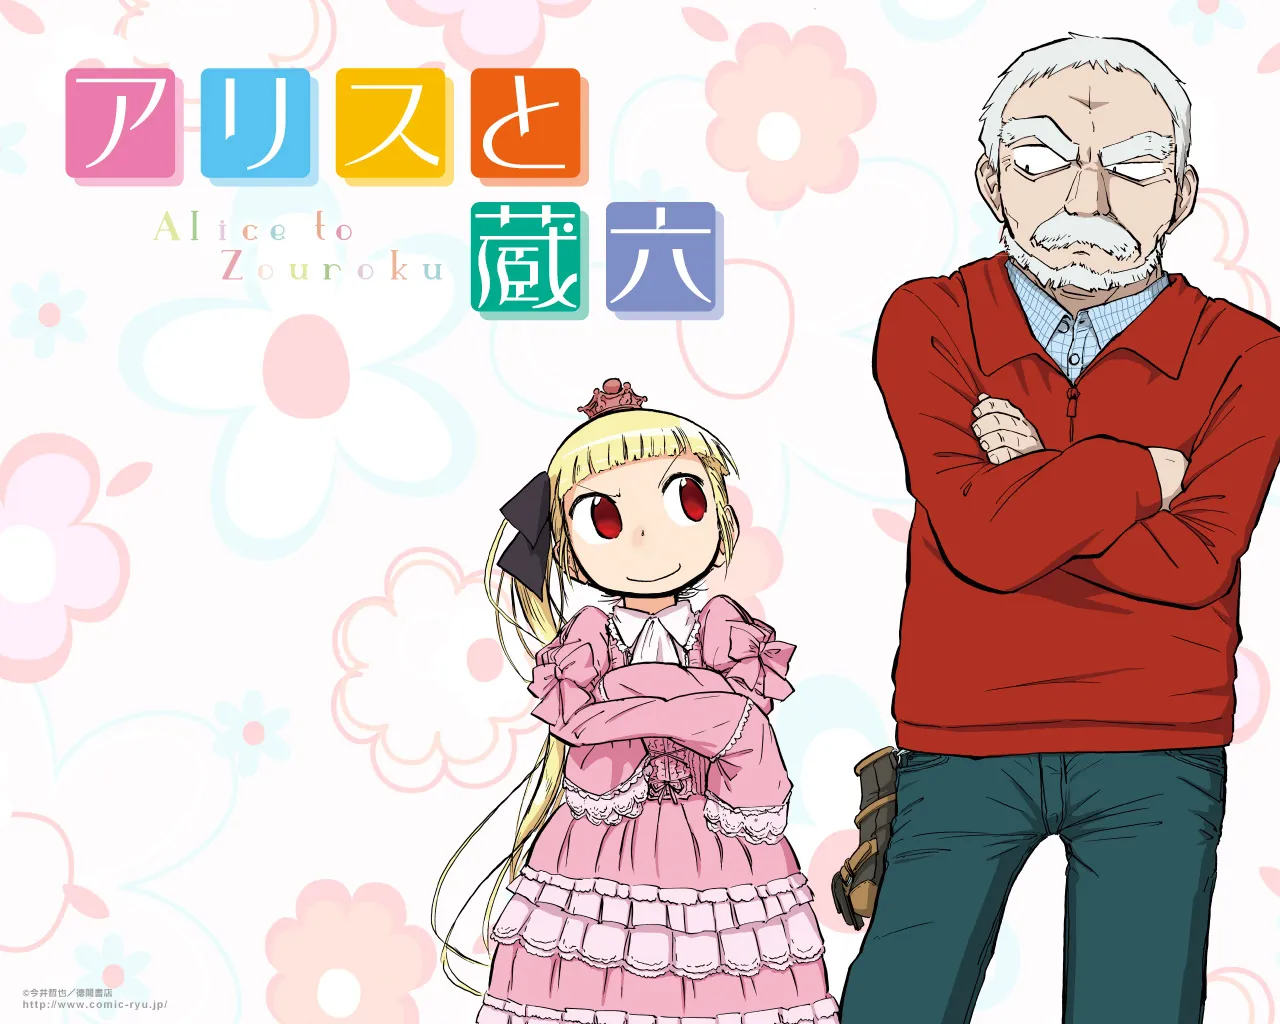 Primeros detalles del anime Alice to Zouroku